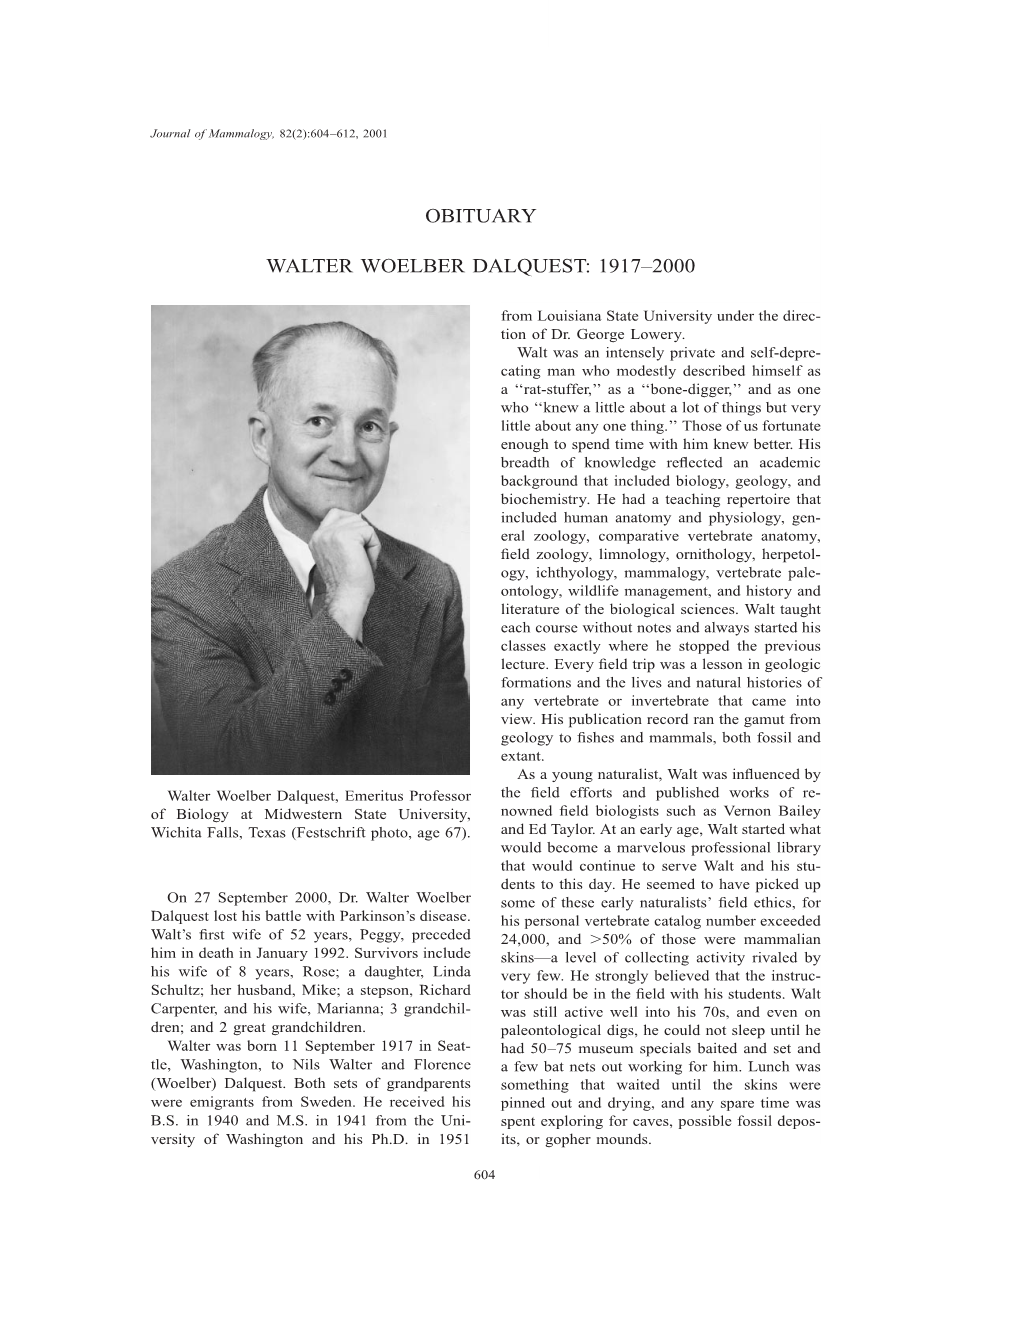 Obituary Walter Woelber Dalquest: 1917–2000